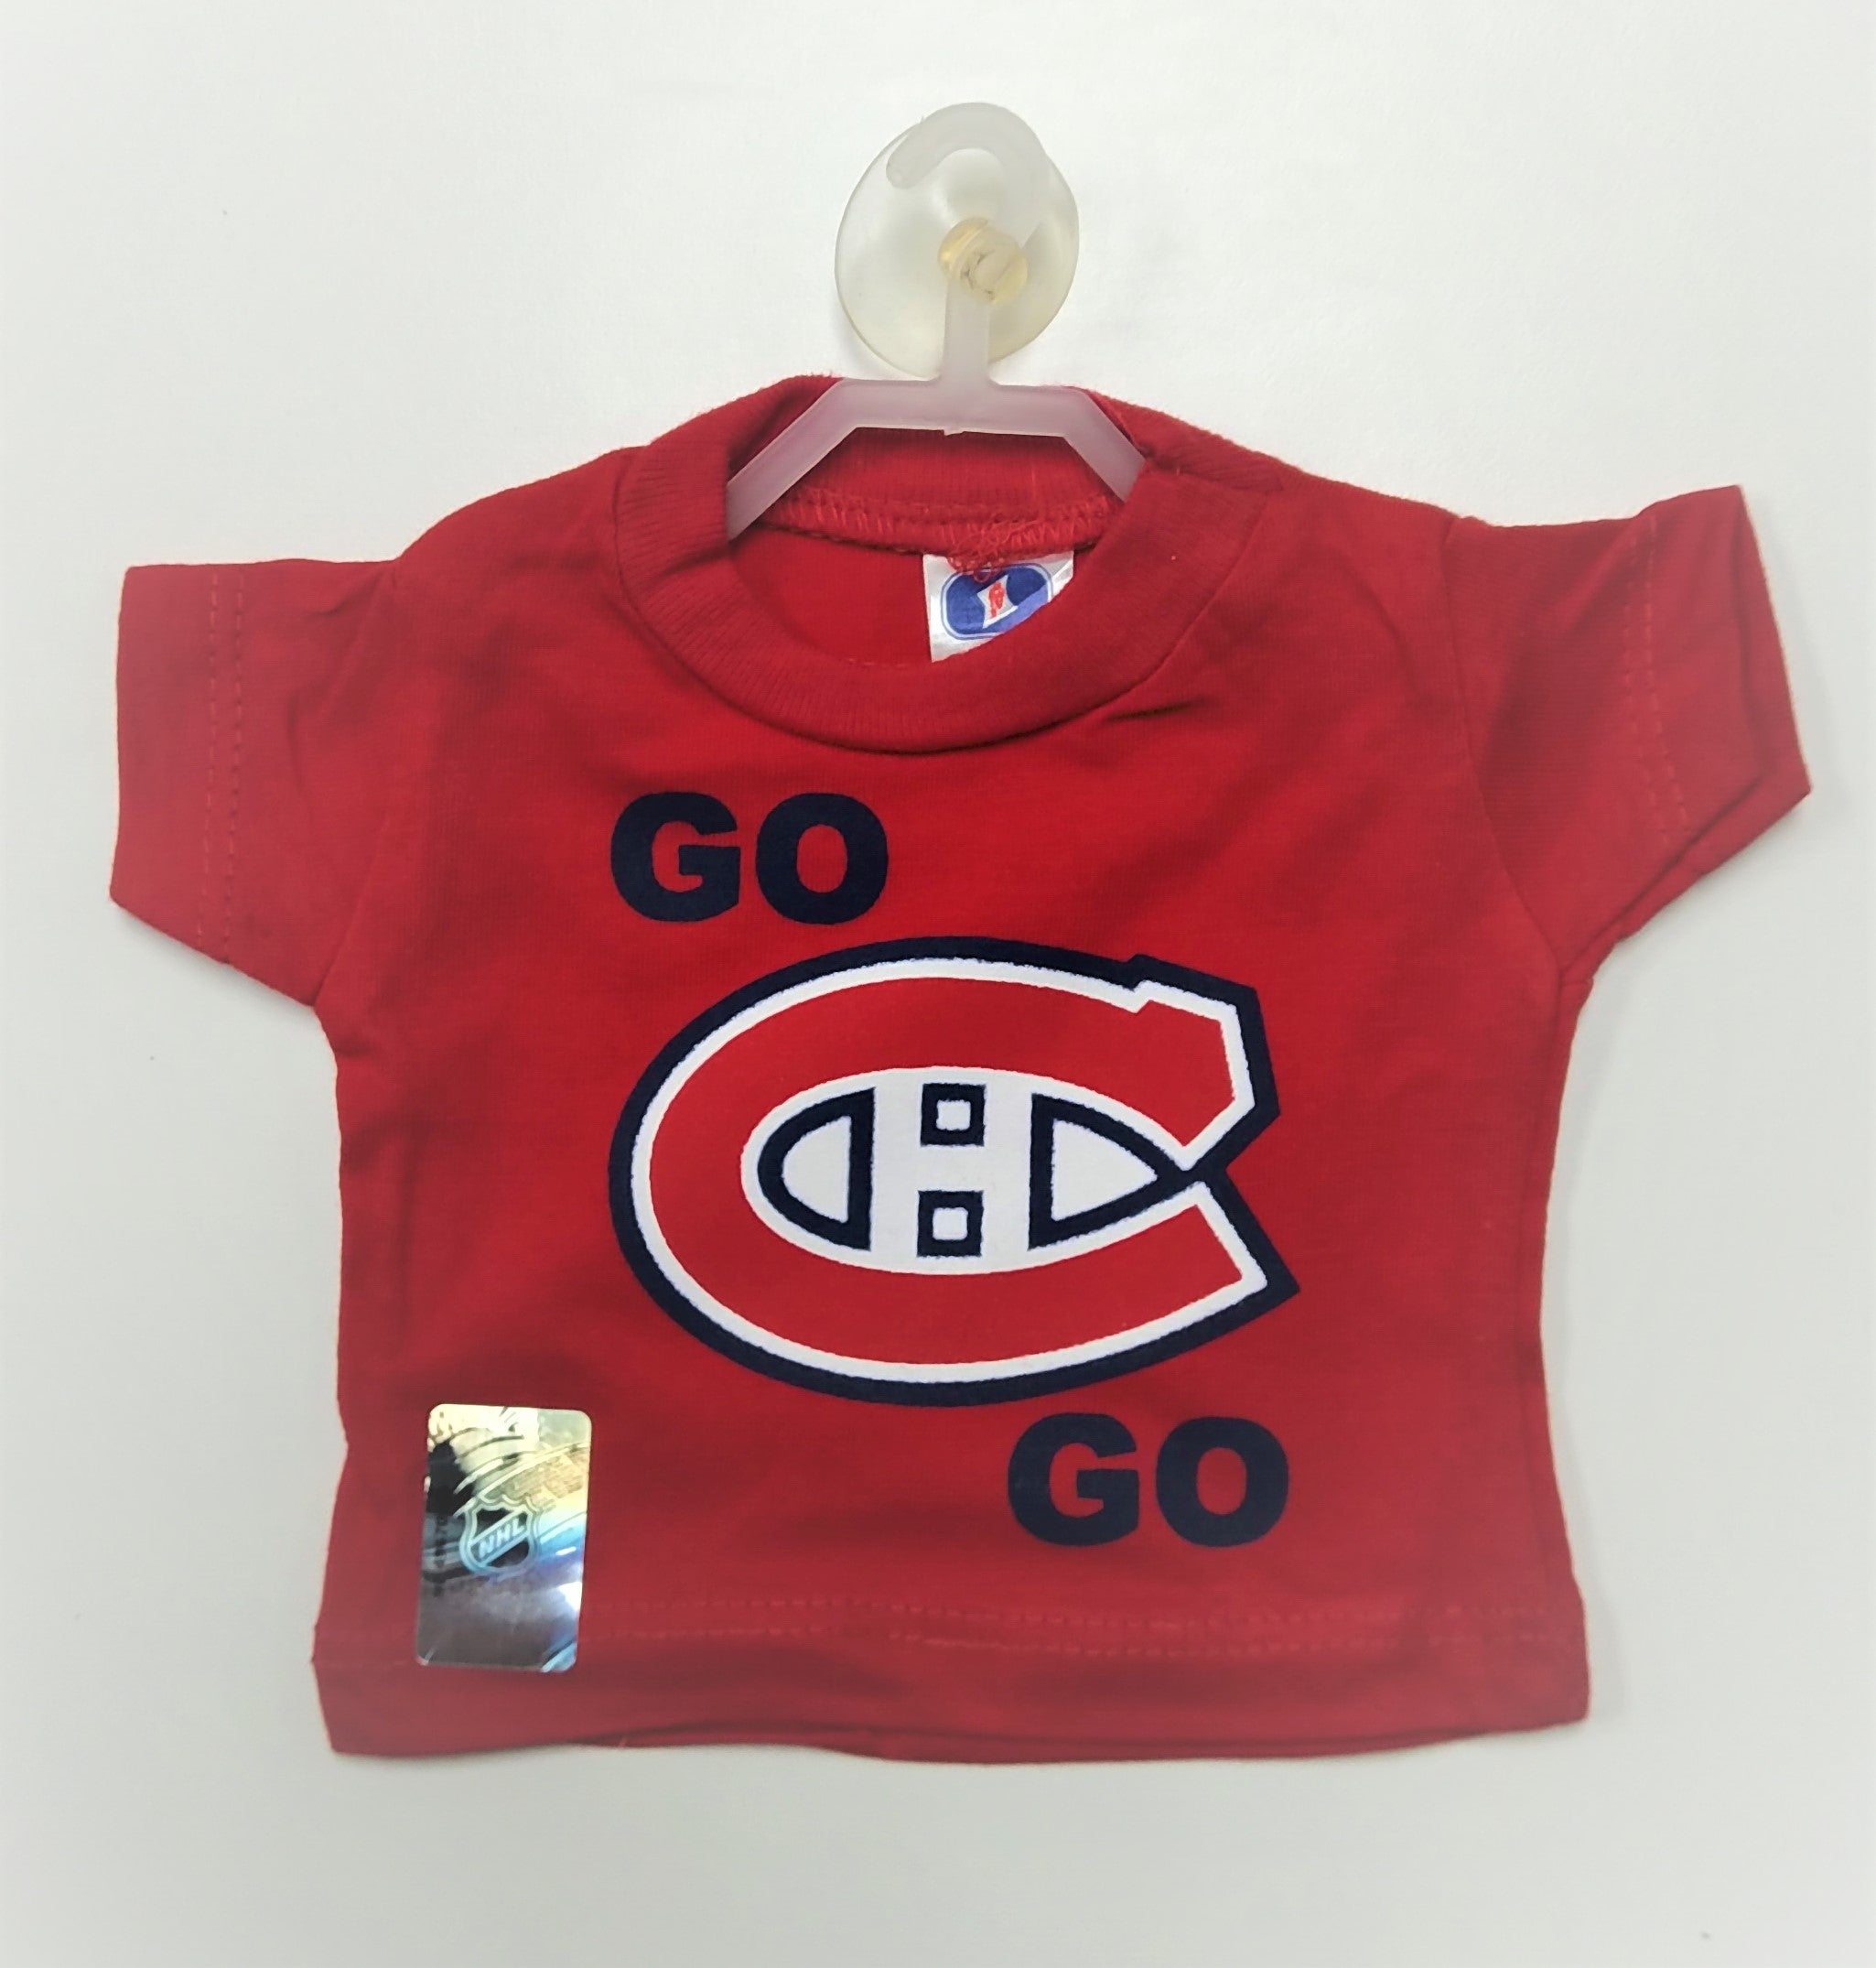 Montreal Canadiens "Habs Fan" Car Hanging Ornament - Miraj Trading